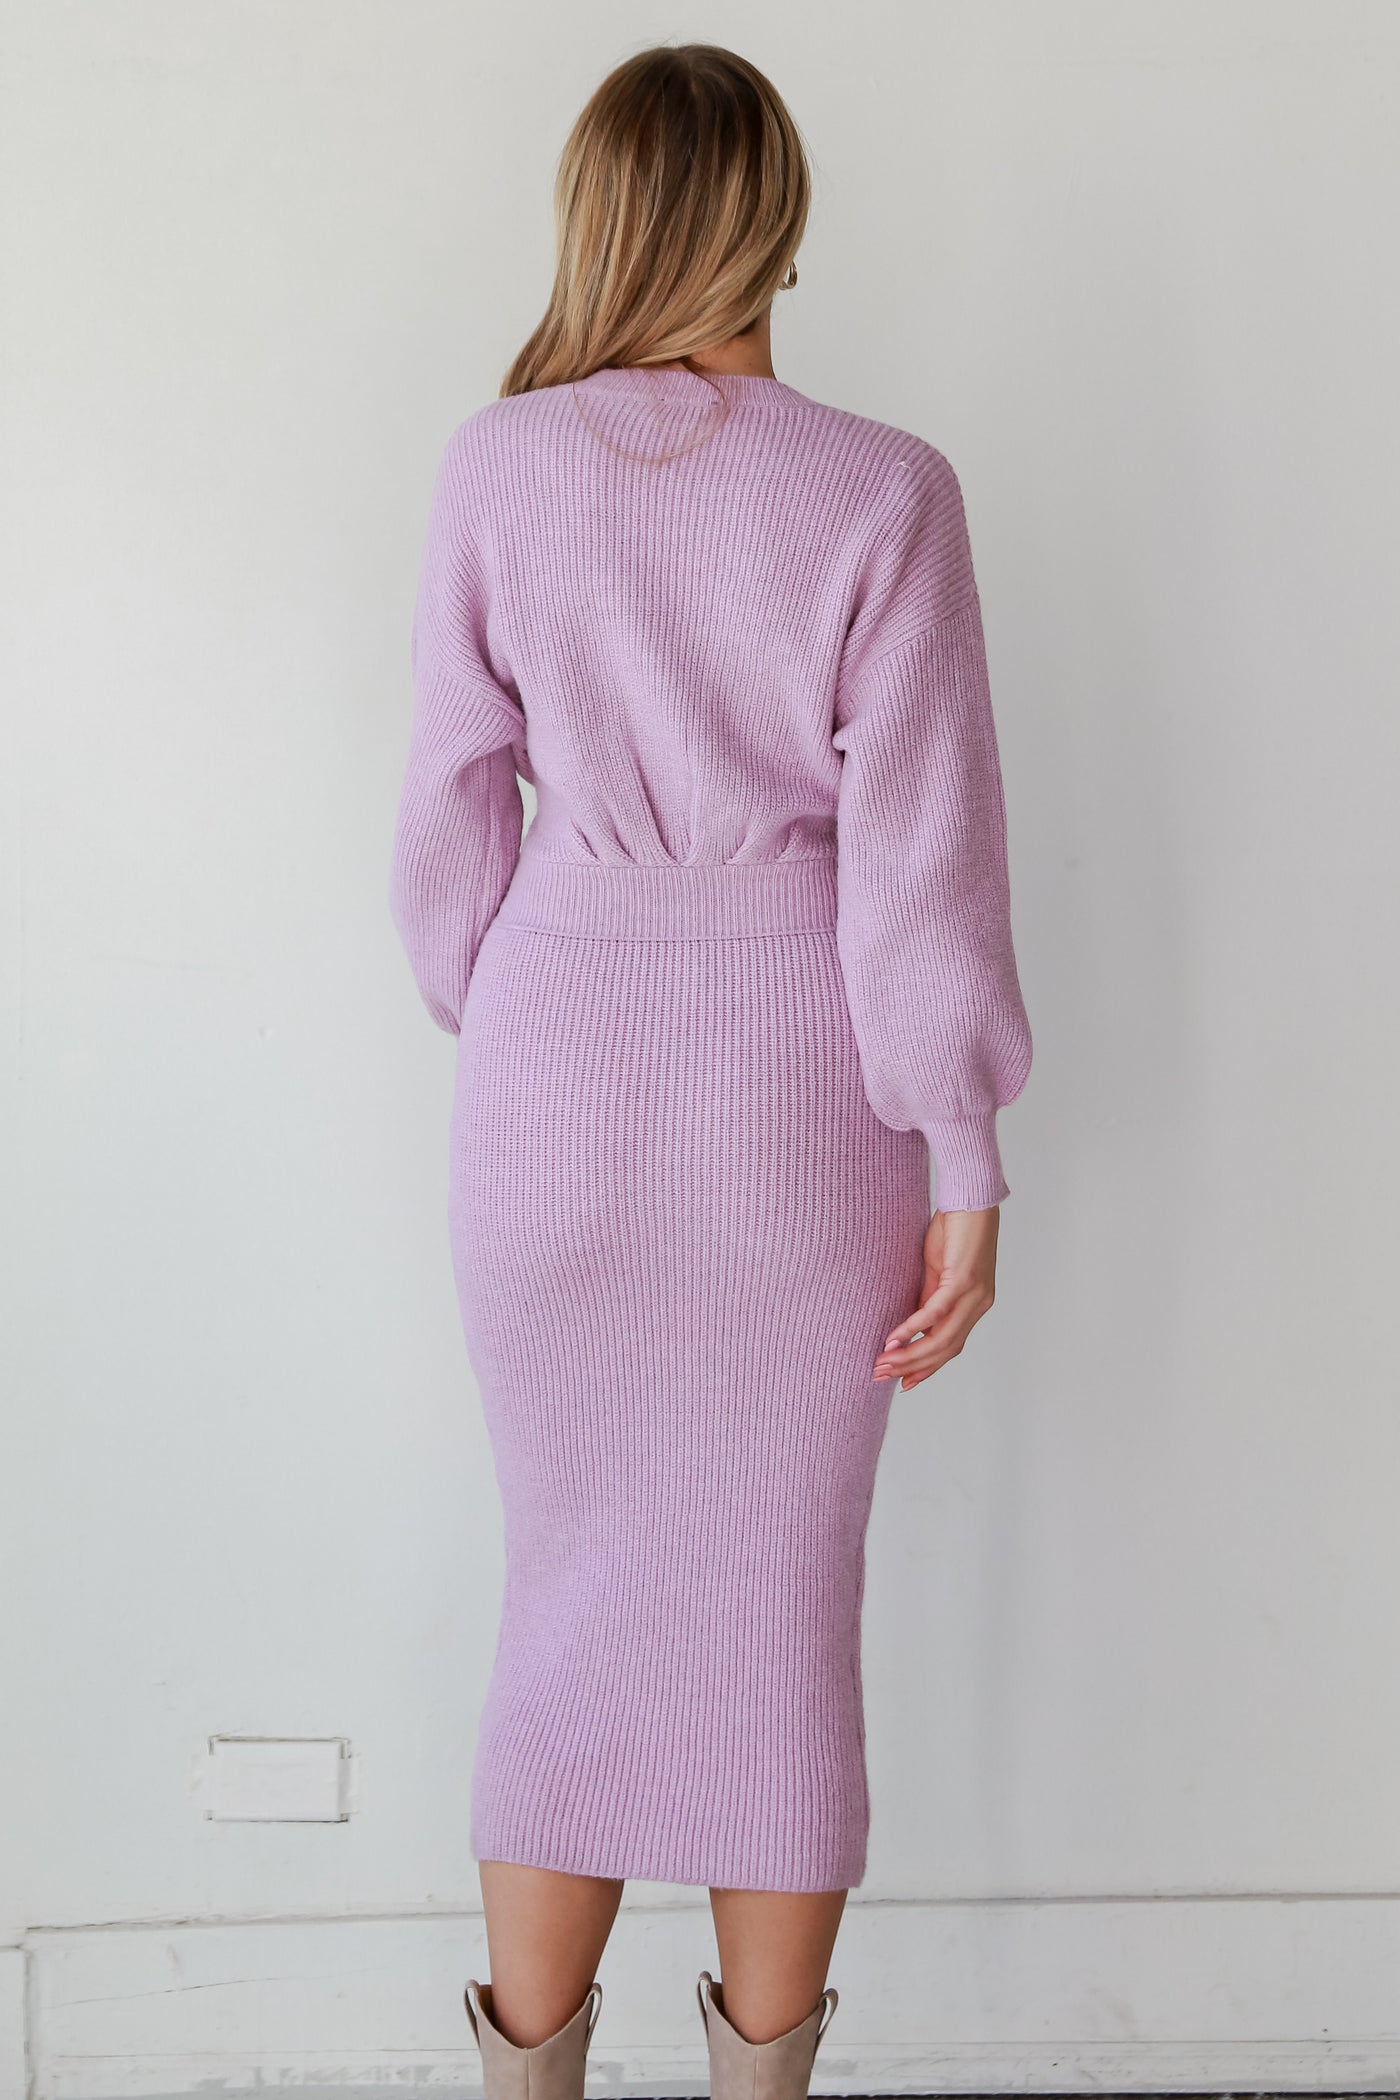 purple dresses